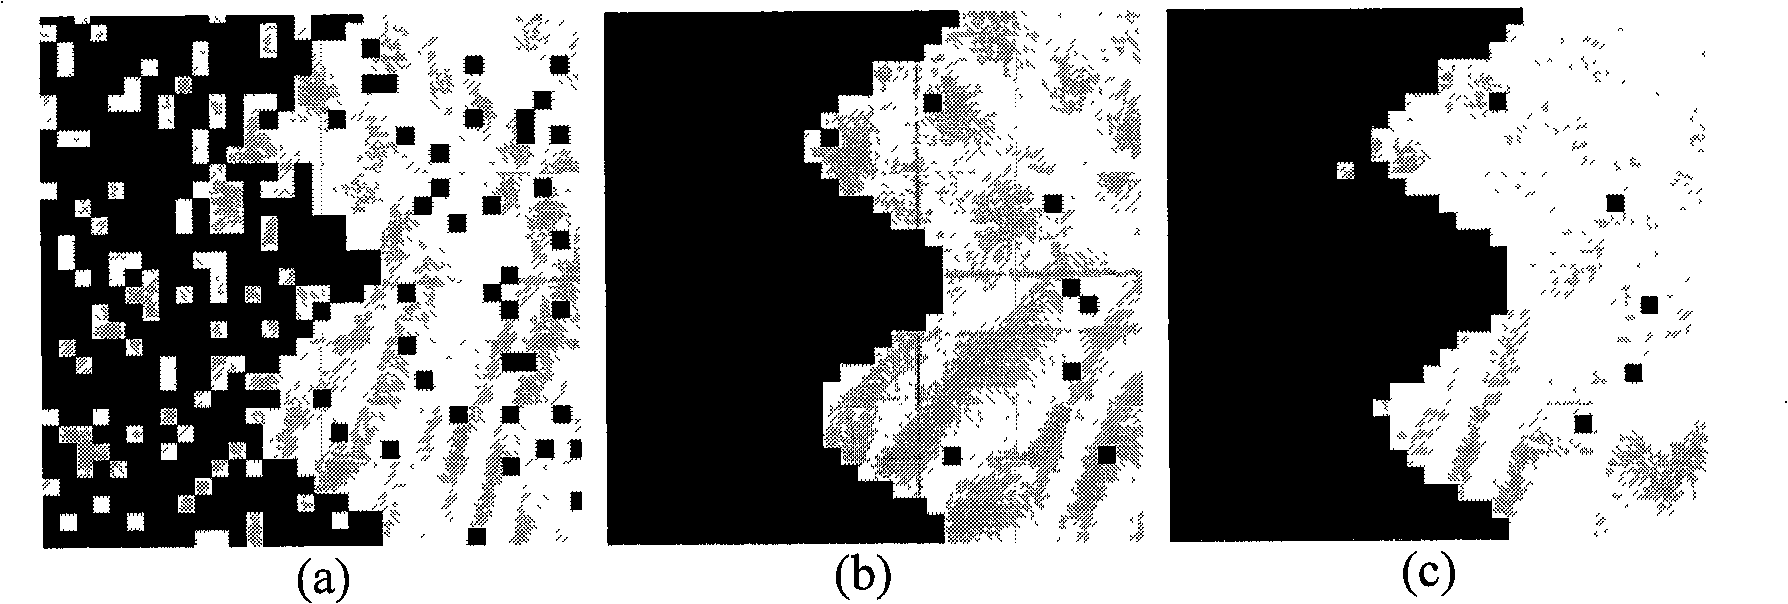 Texture image segmentation method based on independent Gaussian hybrid model